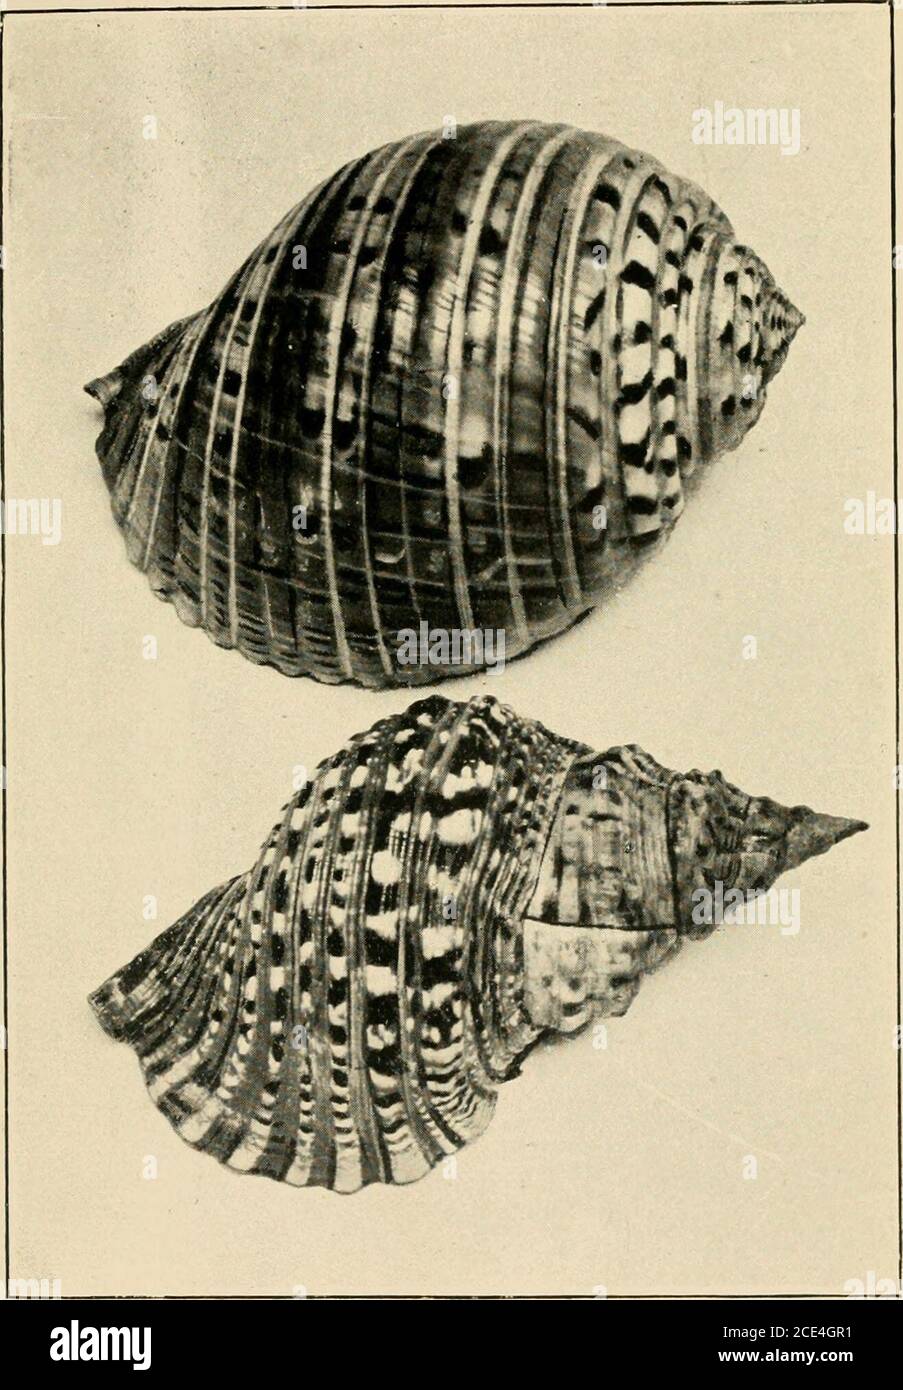 . Beautiful shells of New Zealand : an illustrated work for amateur collectors of New Zealand marine shells, with directions for collecting and cleaning them . 1—Murex zelandicus2—Murex octogonus 3—Murex eos A—Trophon stangeri5—Trophon ambiguus6—Trophon cheesemani7—Ancilla australis Page 15161616161717 8 and 9—Purpura suceincta10—Purpura scobina11—Purpura haustrum12—Scaphella pacifica13—Scaphella gracilis14—Mitra melaniana Page 17 17, 17. 18 18, 18 PLATE Ml,. Dolium variegatumLotorium rubicundum Page . 1819 PLATE IV. Stock Photo